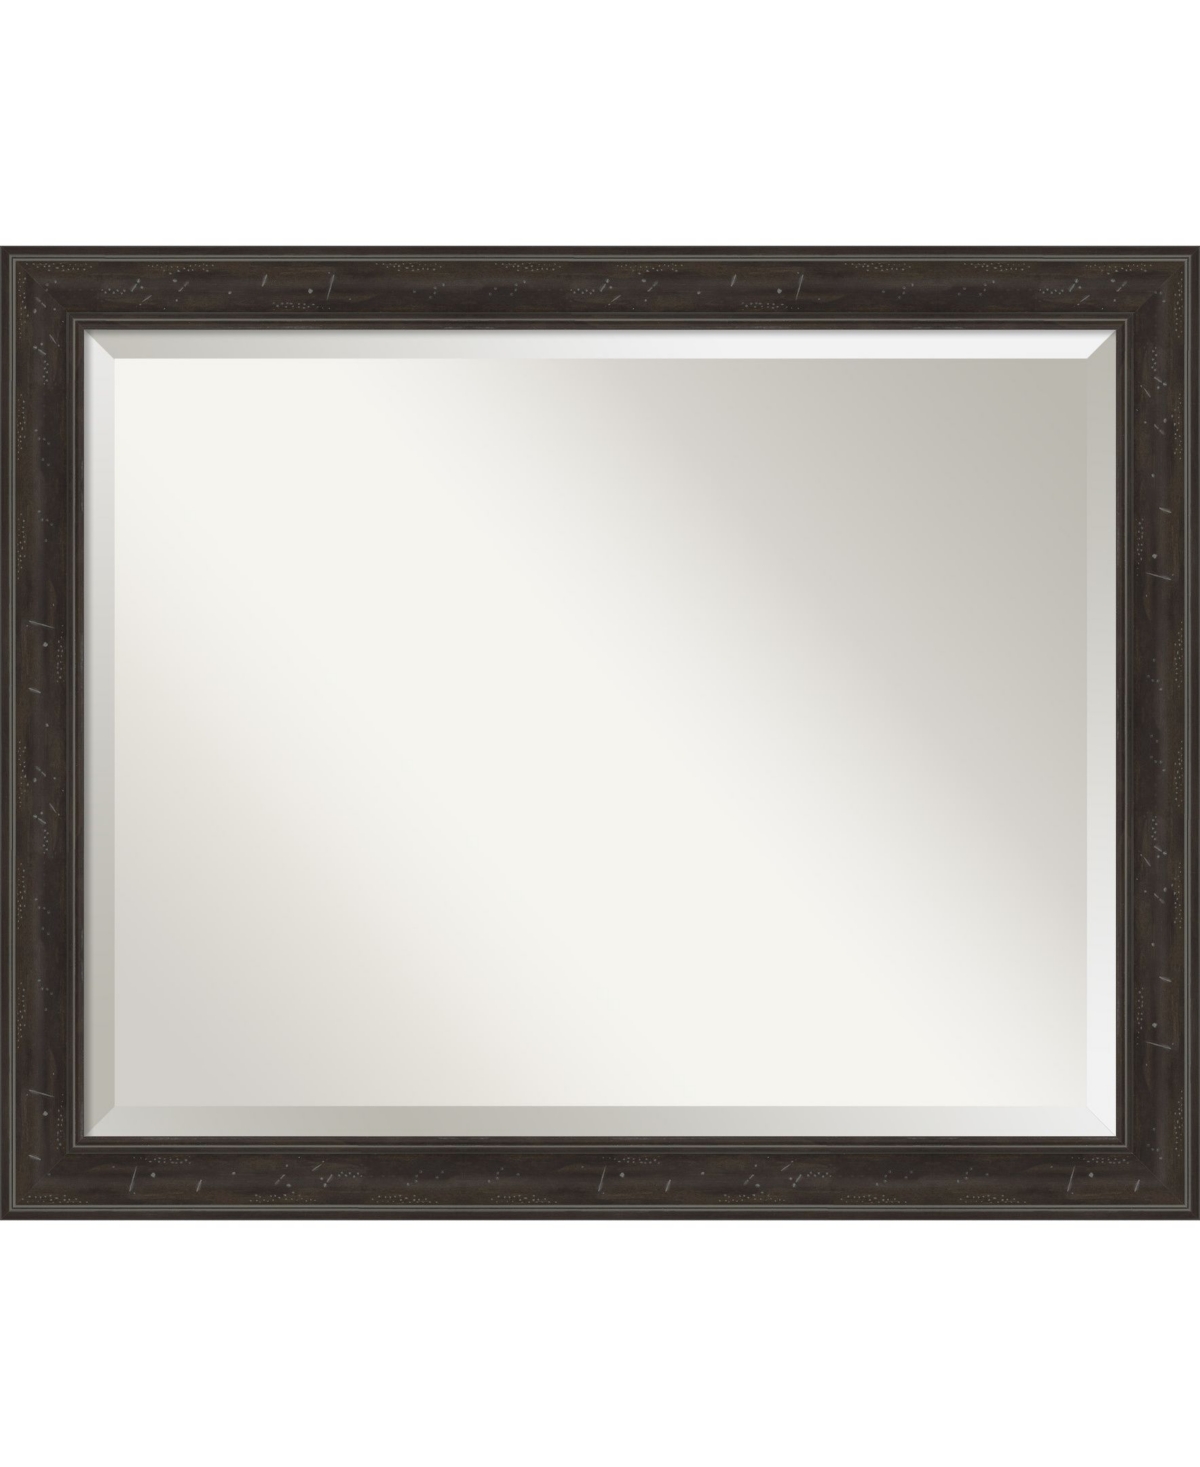 Shipwreck Framed Bathroom Vanity Wall Mirror, 32" x 26" - Dark Brown